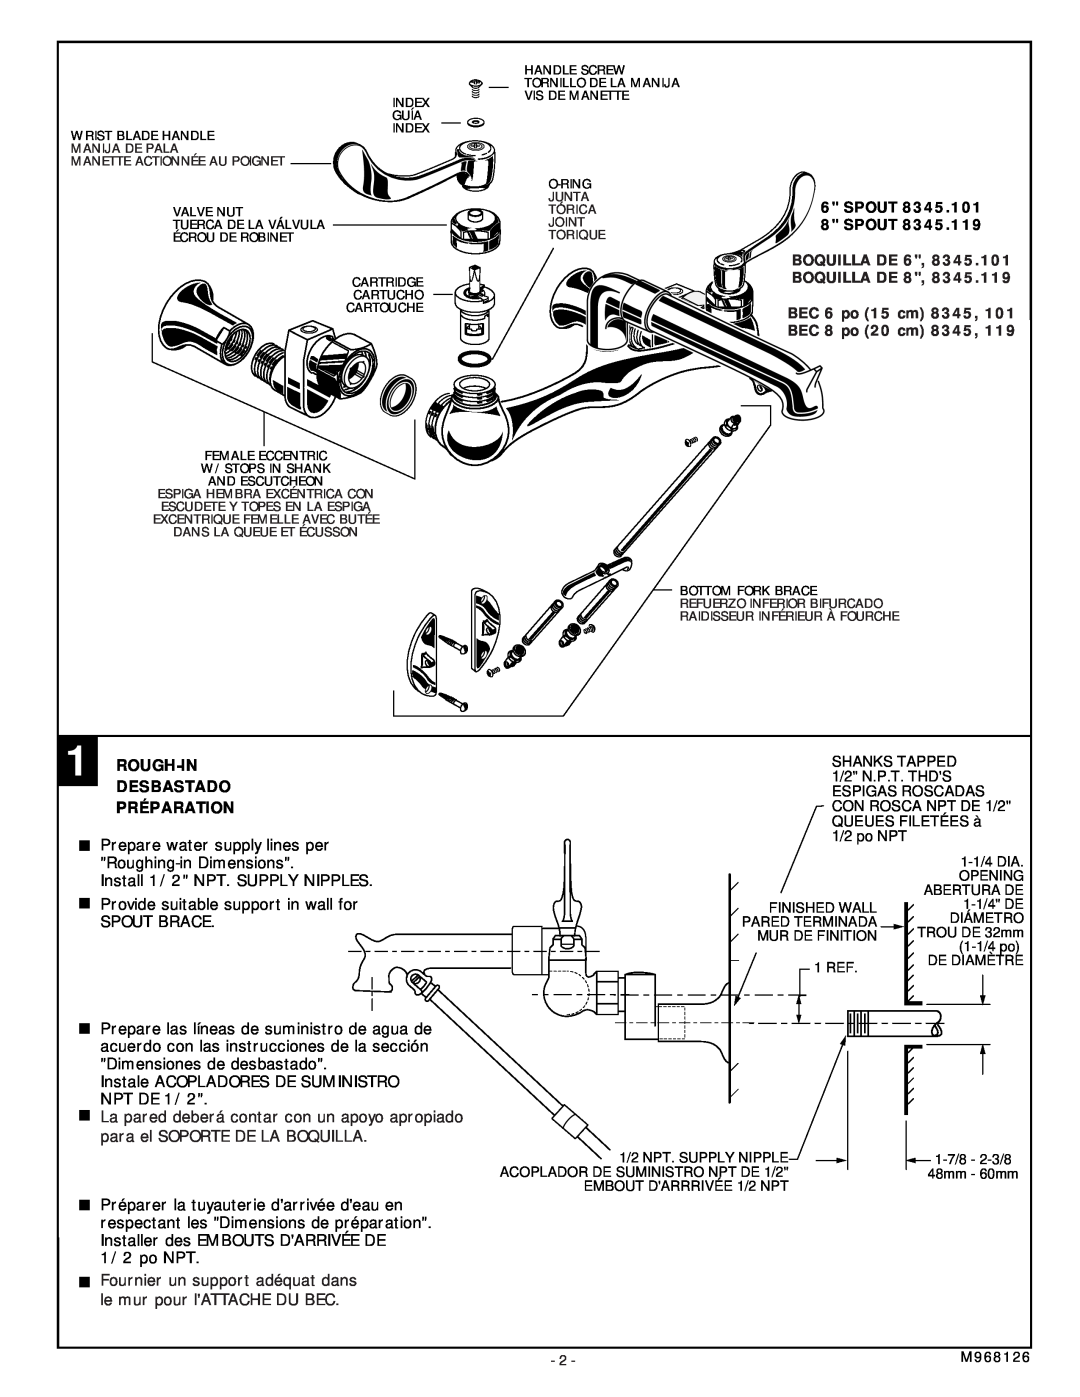 American Standard 8345.119, 8345.101 installation instructions Rough-Indesbastado Préparation 